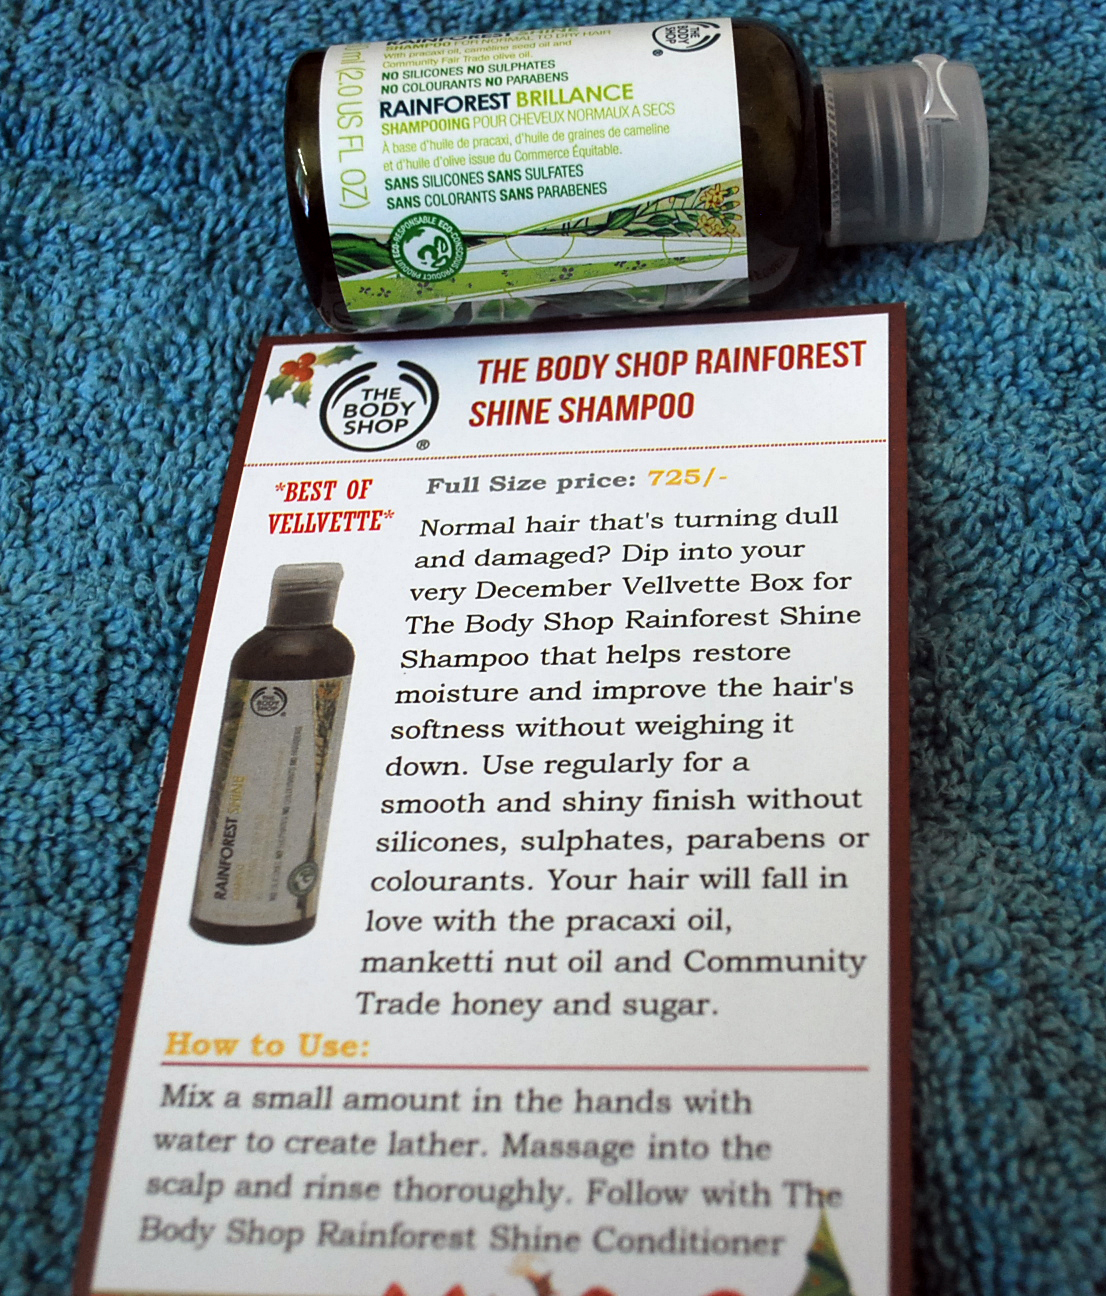 Rainforest Shampoo Card  - The Vellvette Box - December edition